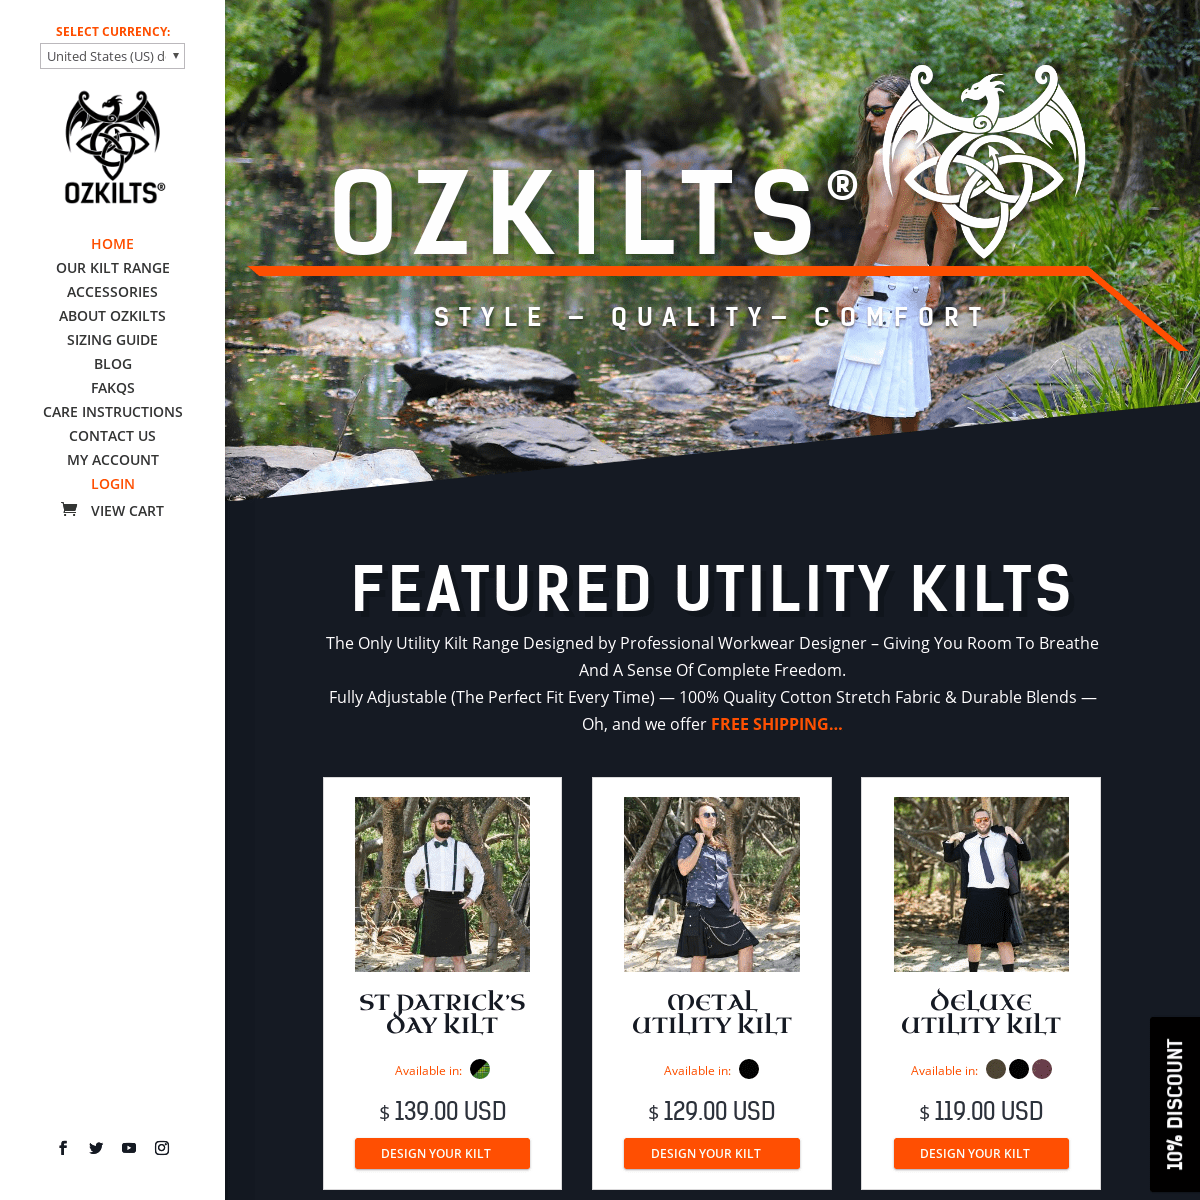 A complete backup of ozkilts.com